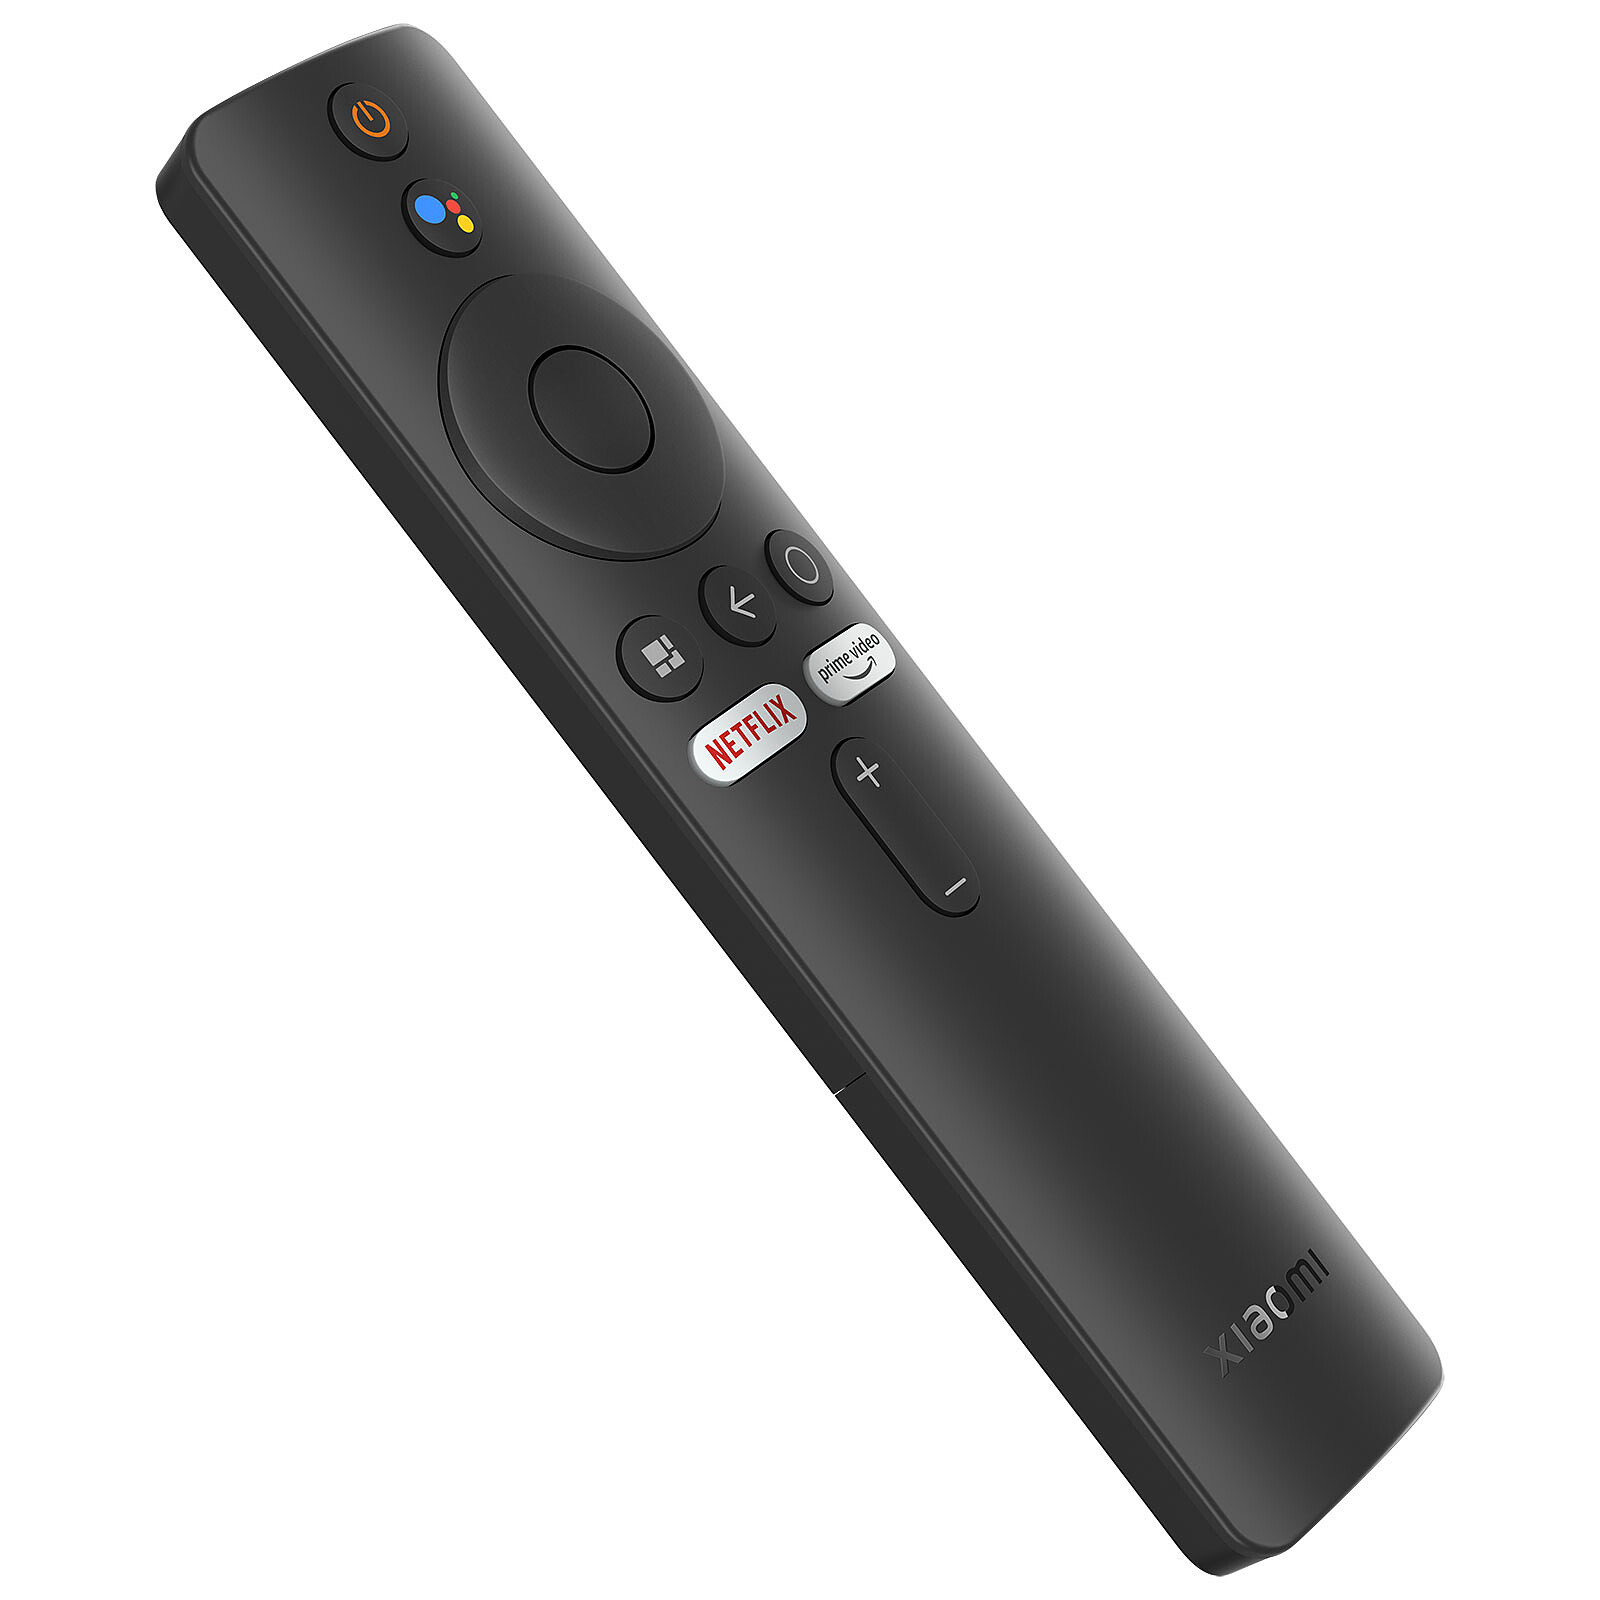 XIAOMI MI TV Stick 4K Android WiFi Smart Streaming Device Media